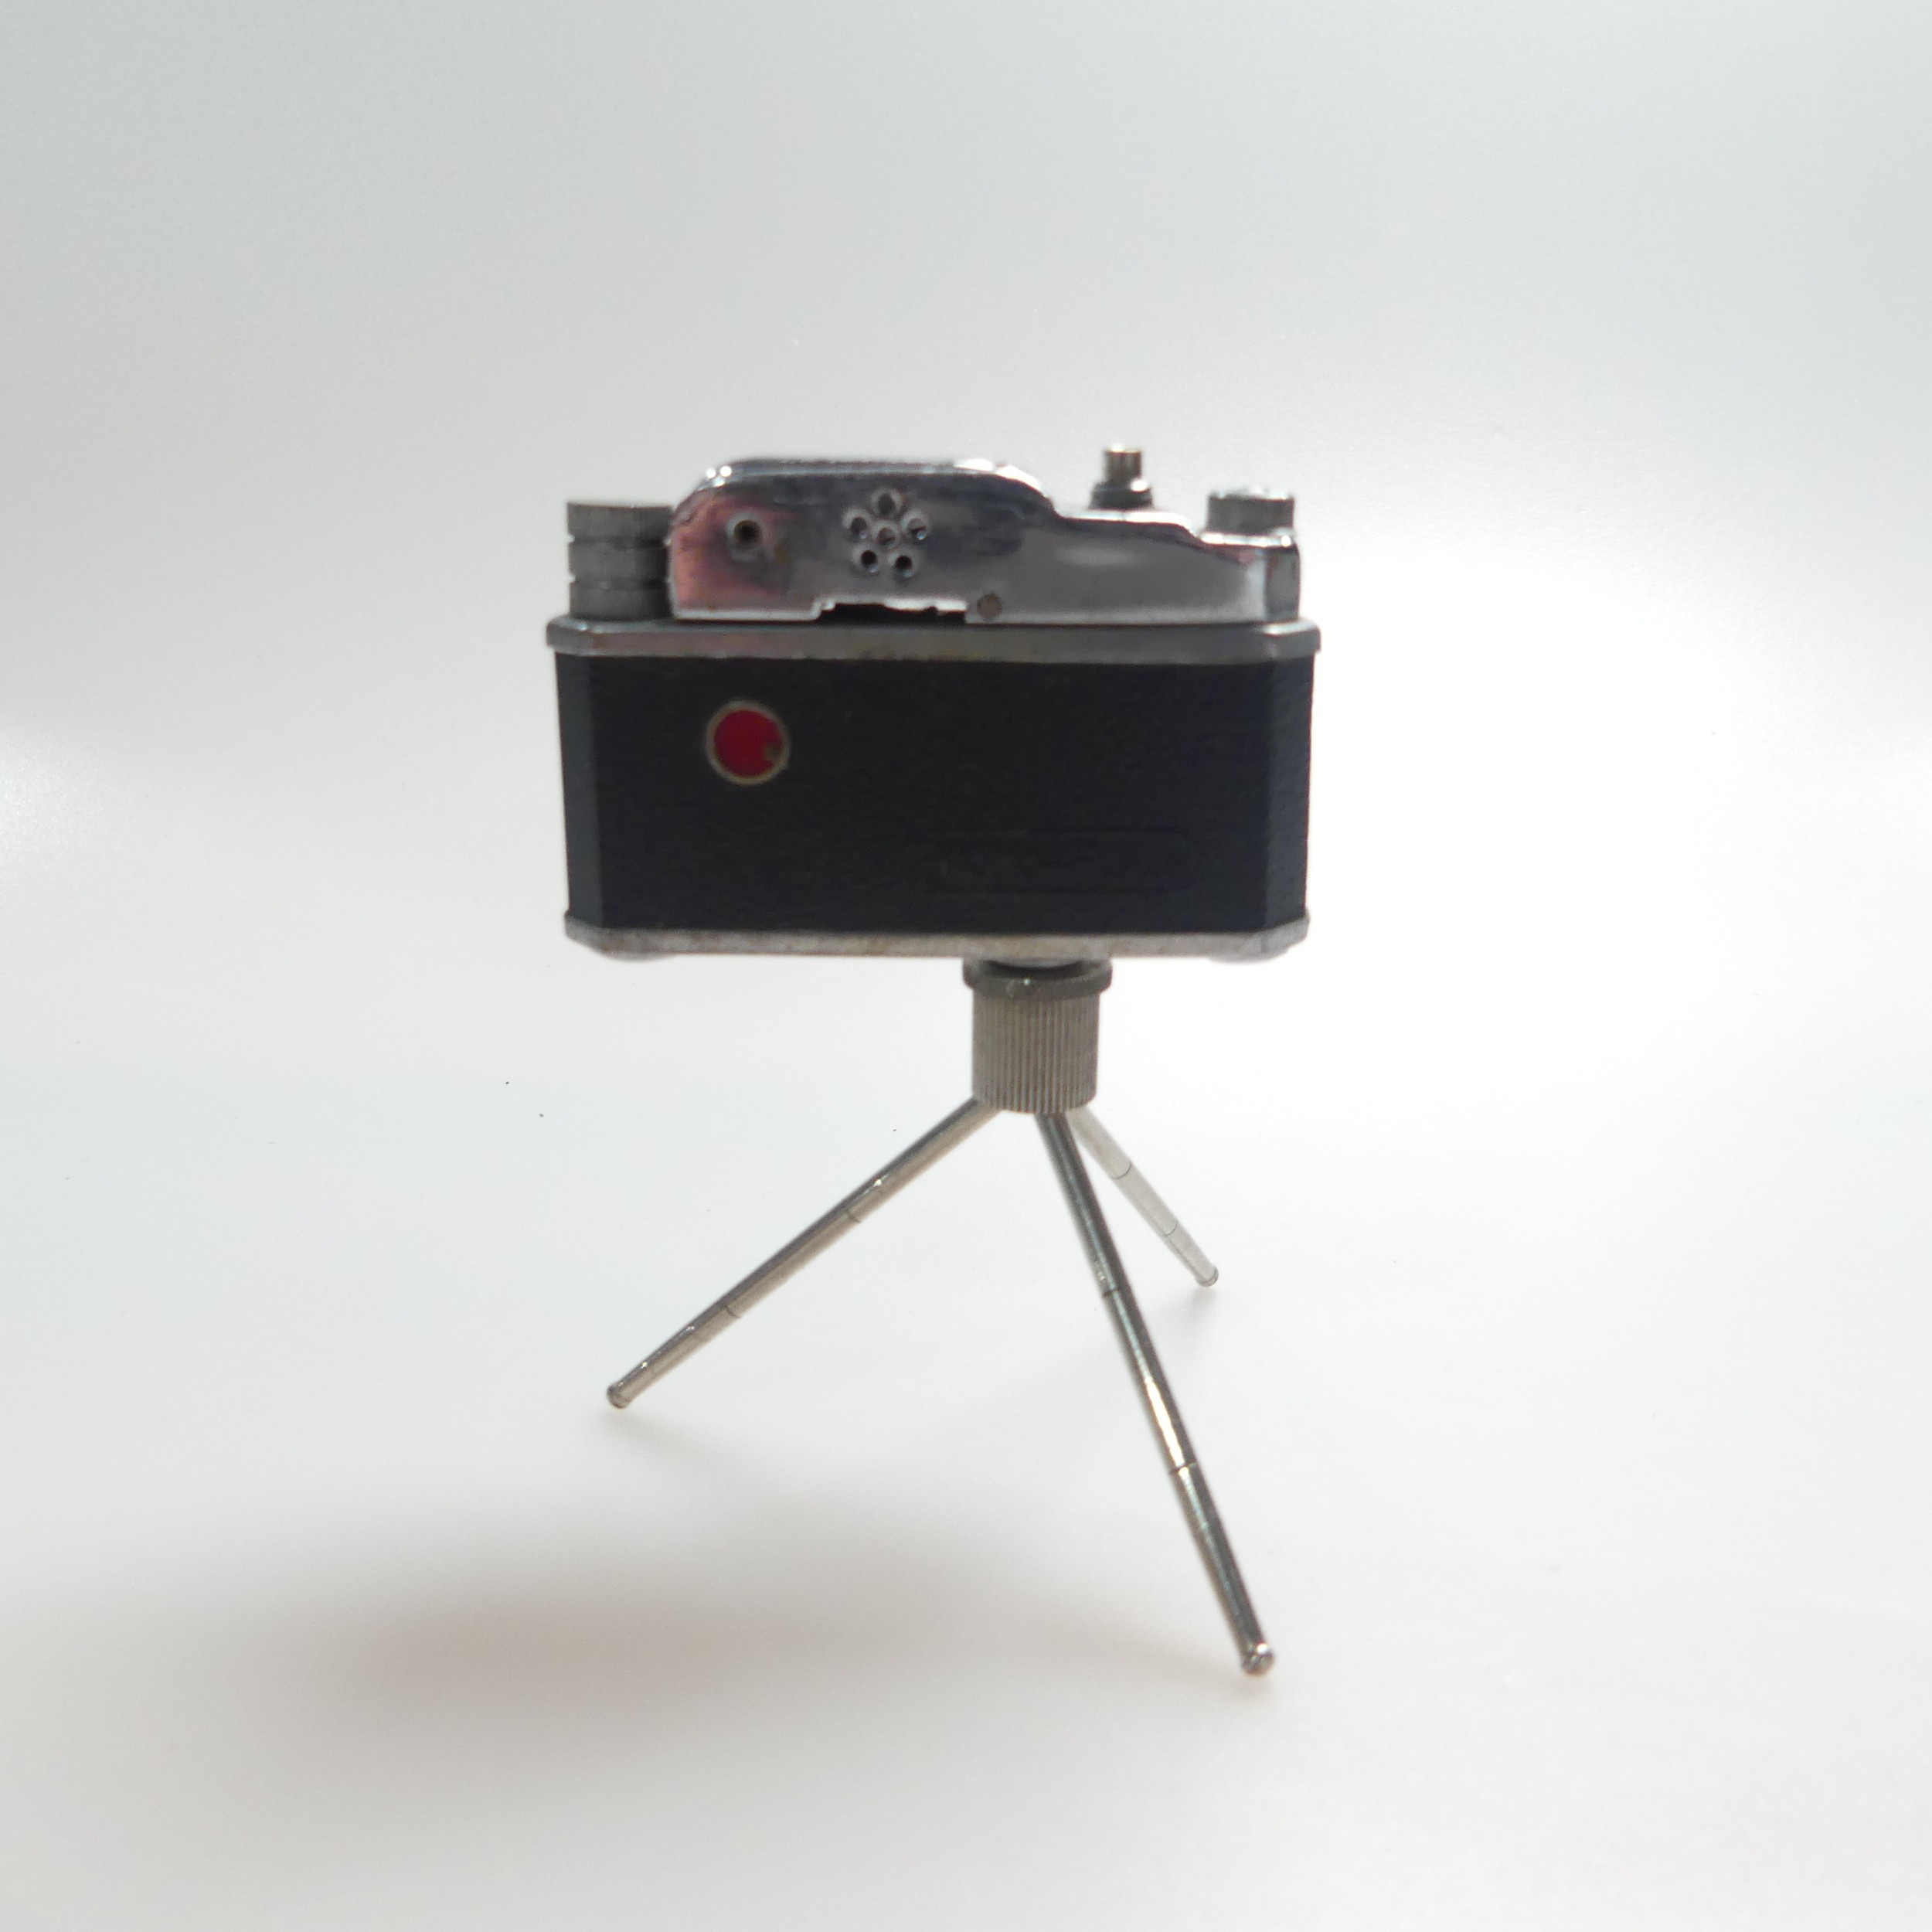 K.K.W. novelty miniature Camera Lighter on tripod, H: 9cm, including tripod, together with a vintage - Image 5 of 6